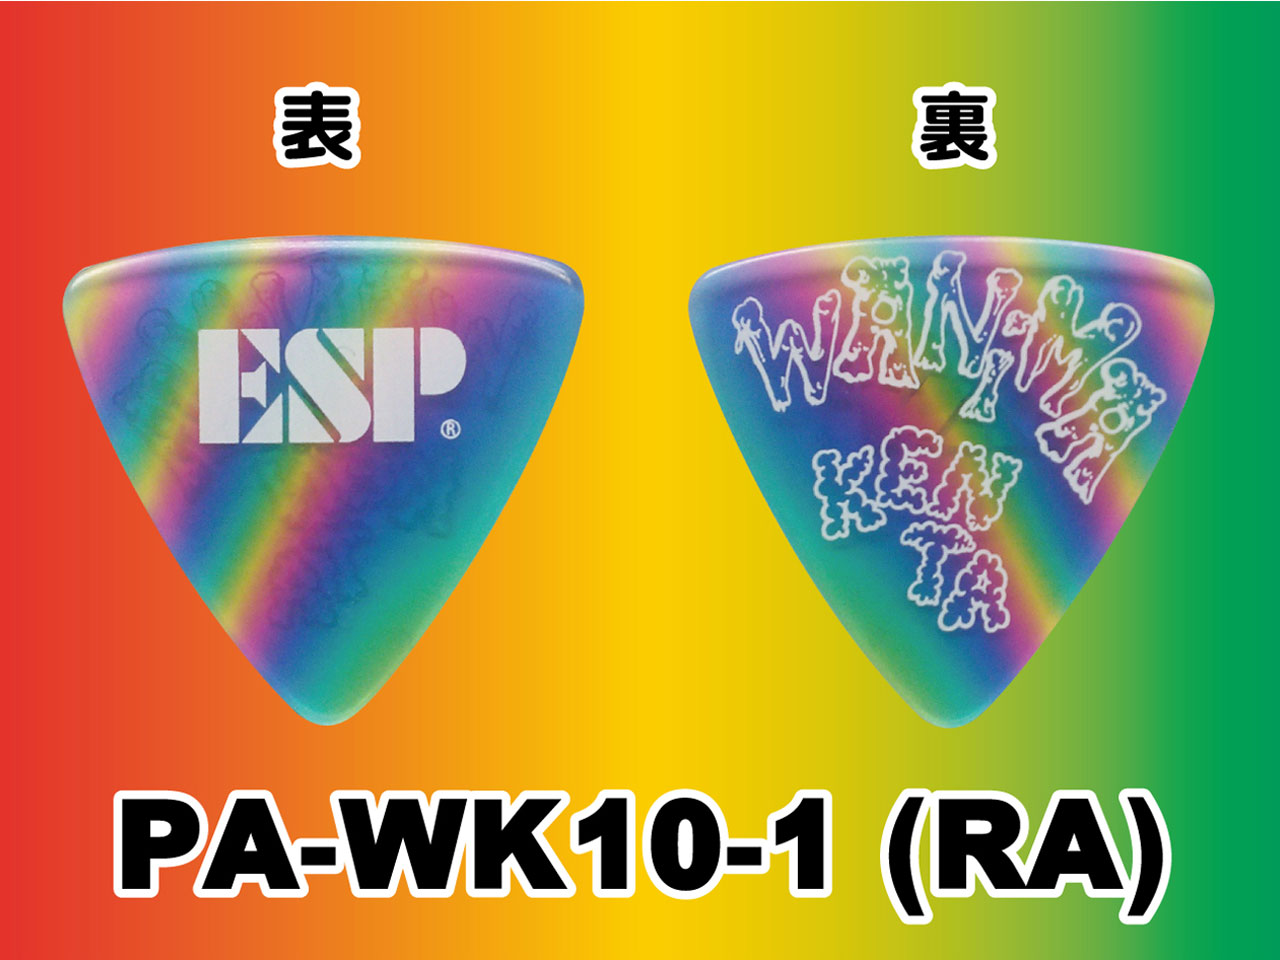 ESP(イーエスピー) Artist Pick Series PA-WK10-1 (WANIMA/KENTA Model)